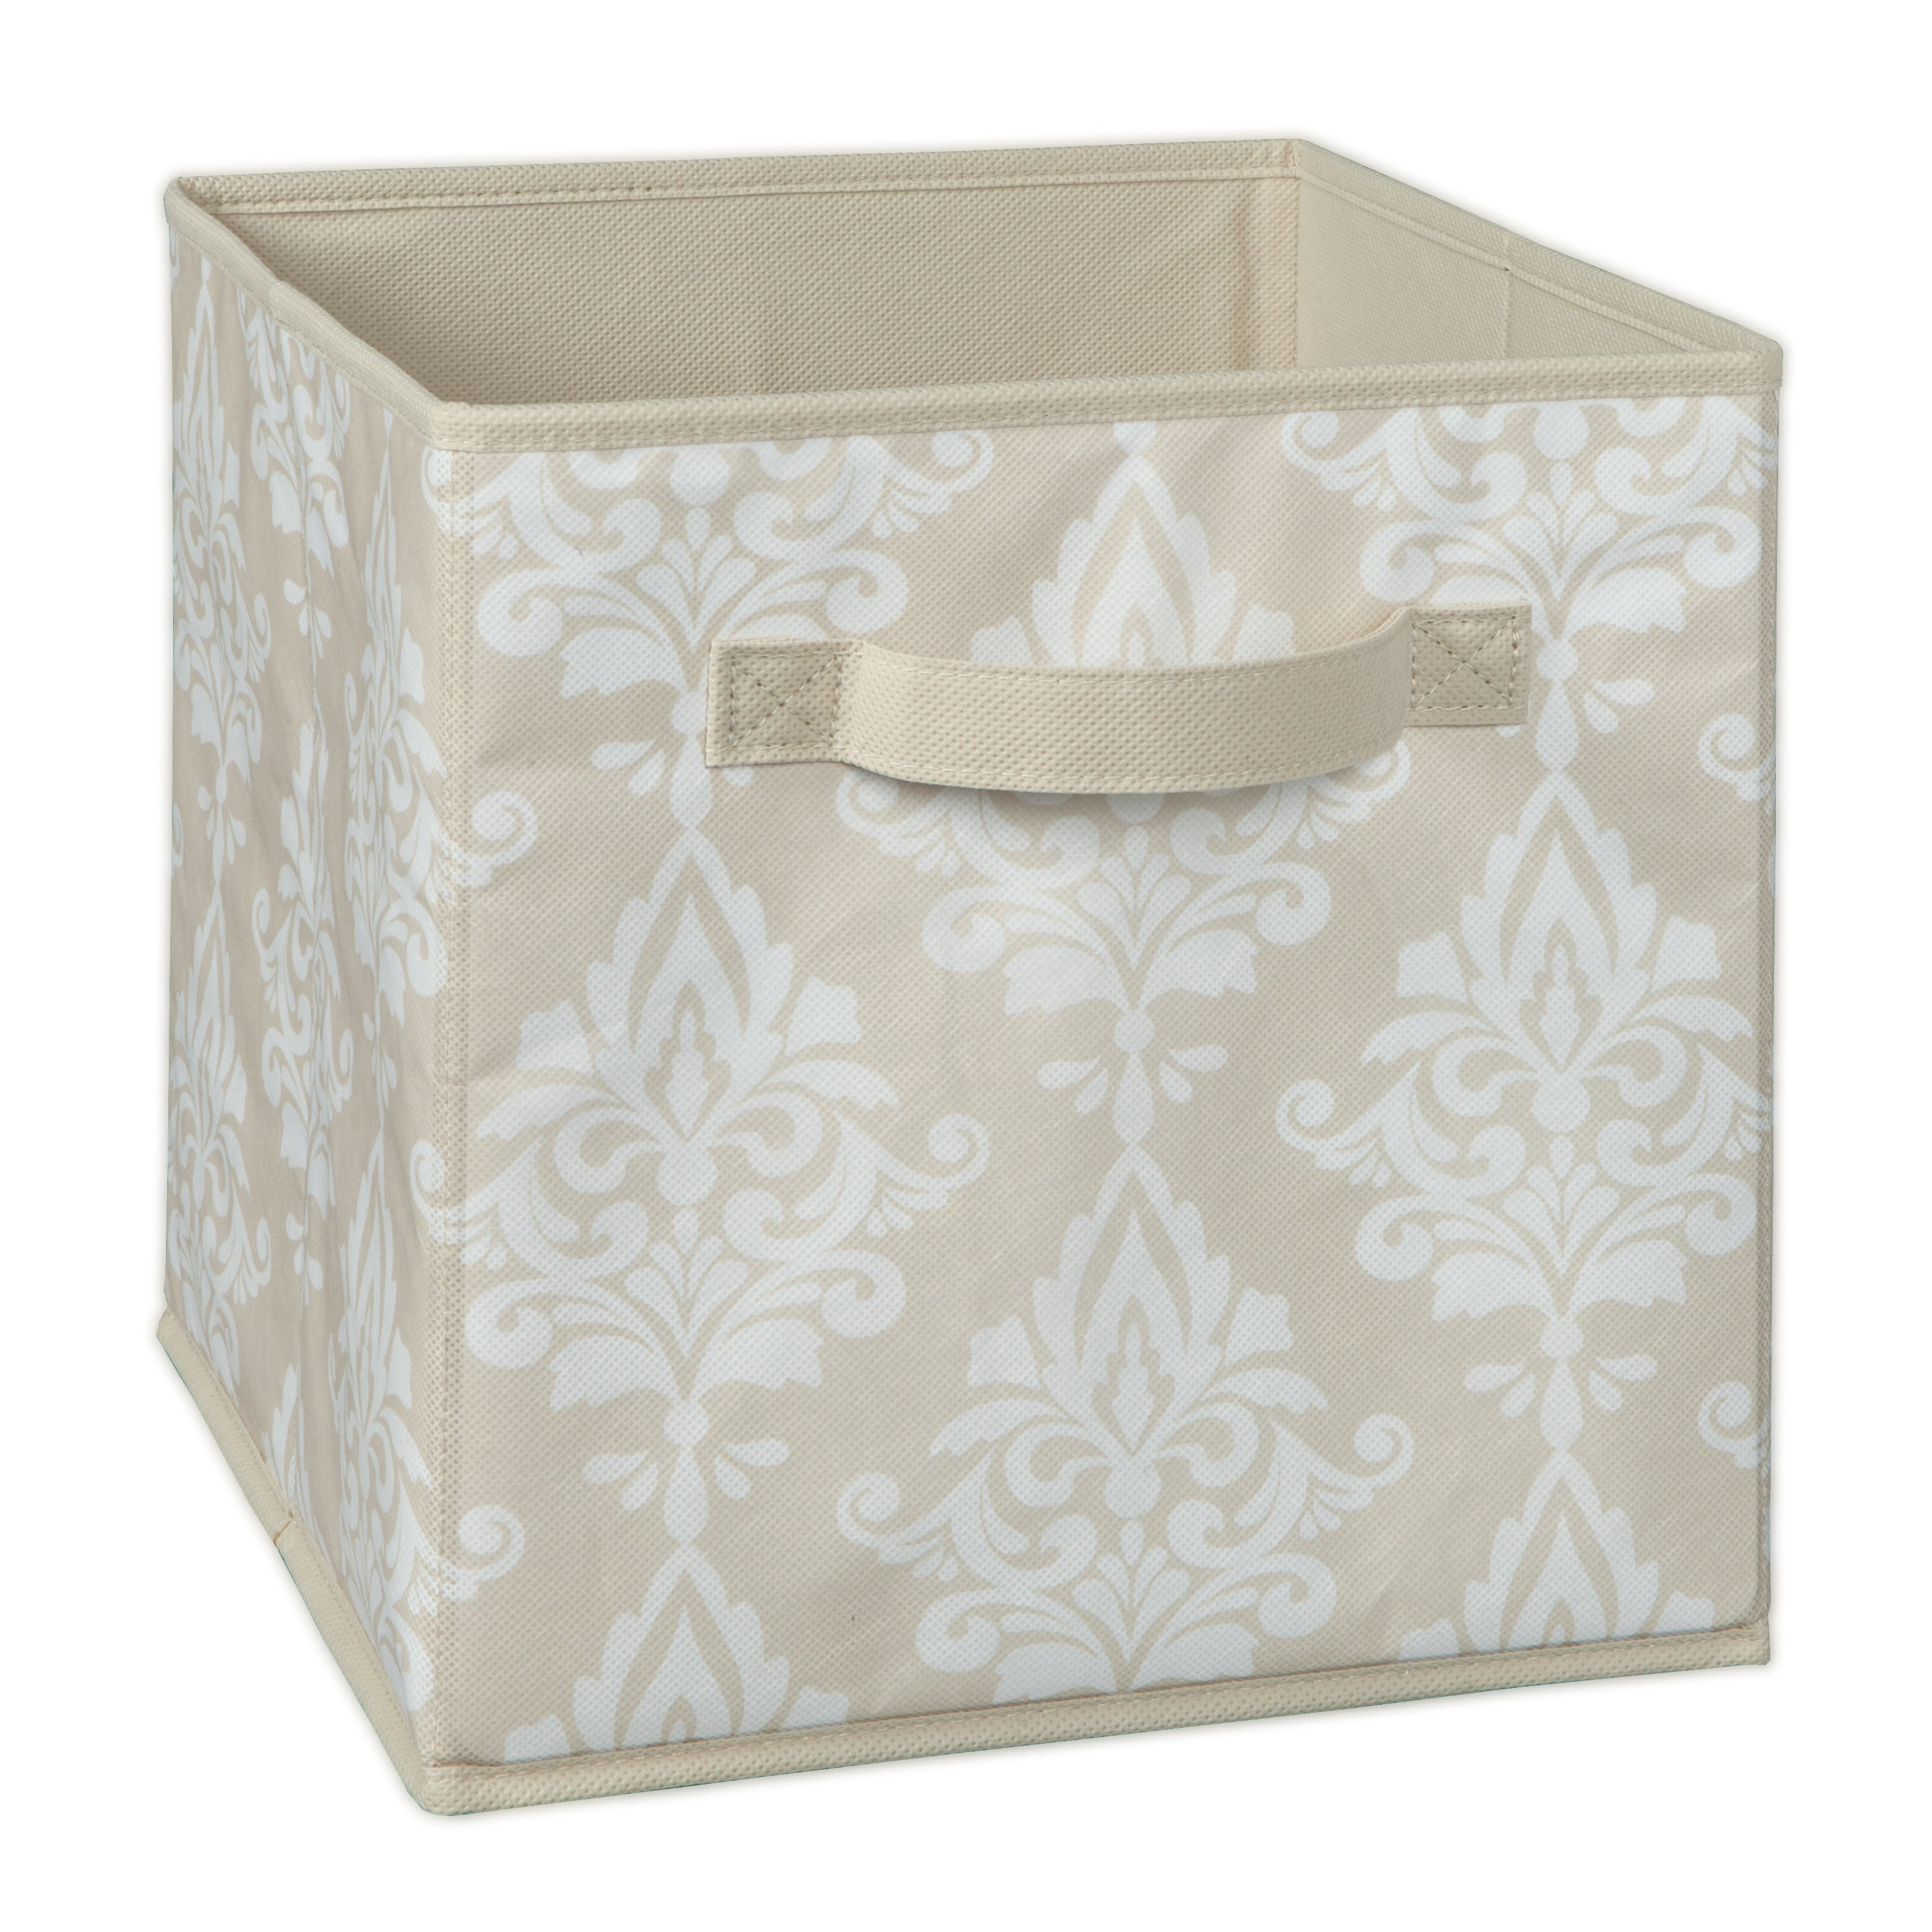 Closetmaid Cubeicals Fabric Storage Bin Reviews Wayfair within proportions 3180 X 3180